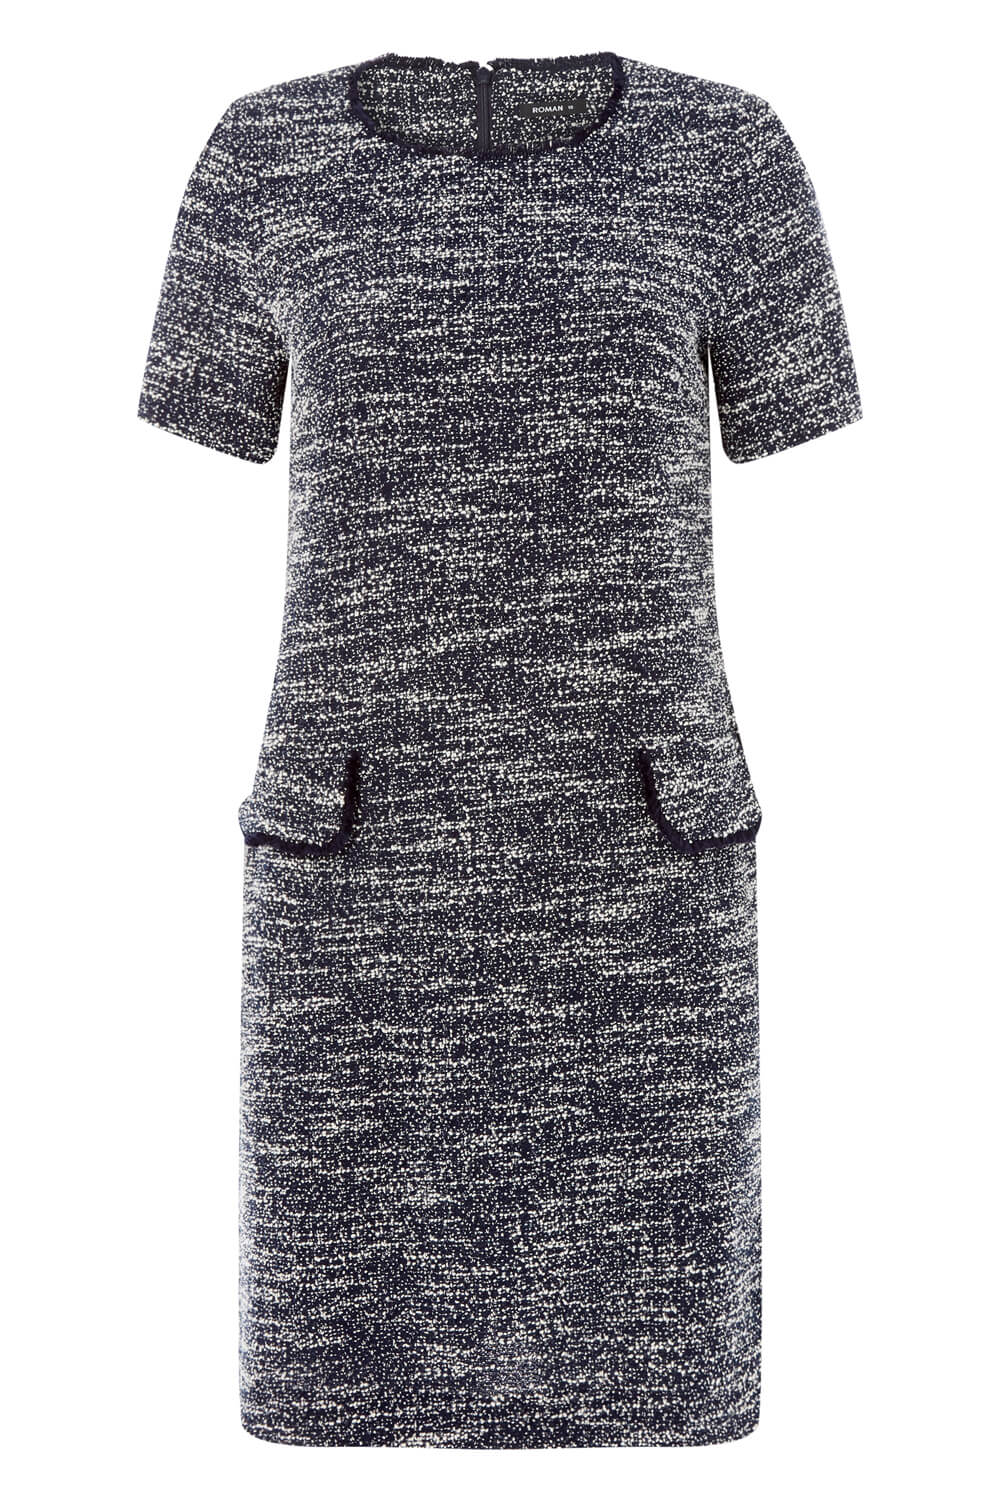  Tweed Shift Dress, Image 5 of 5